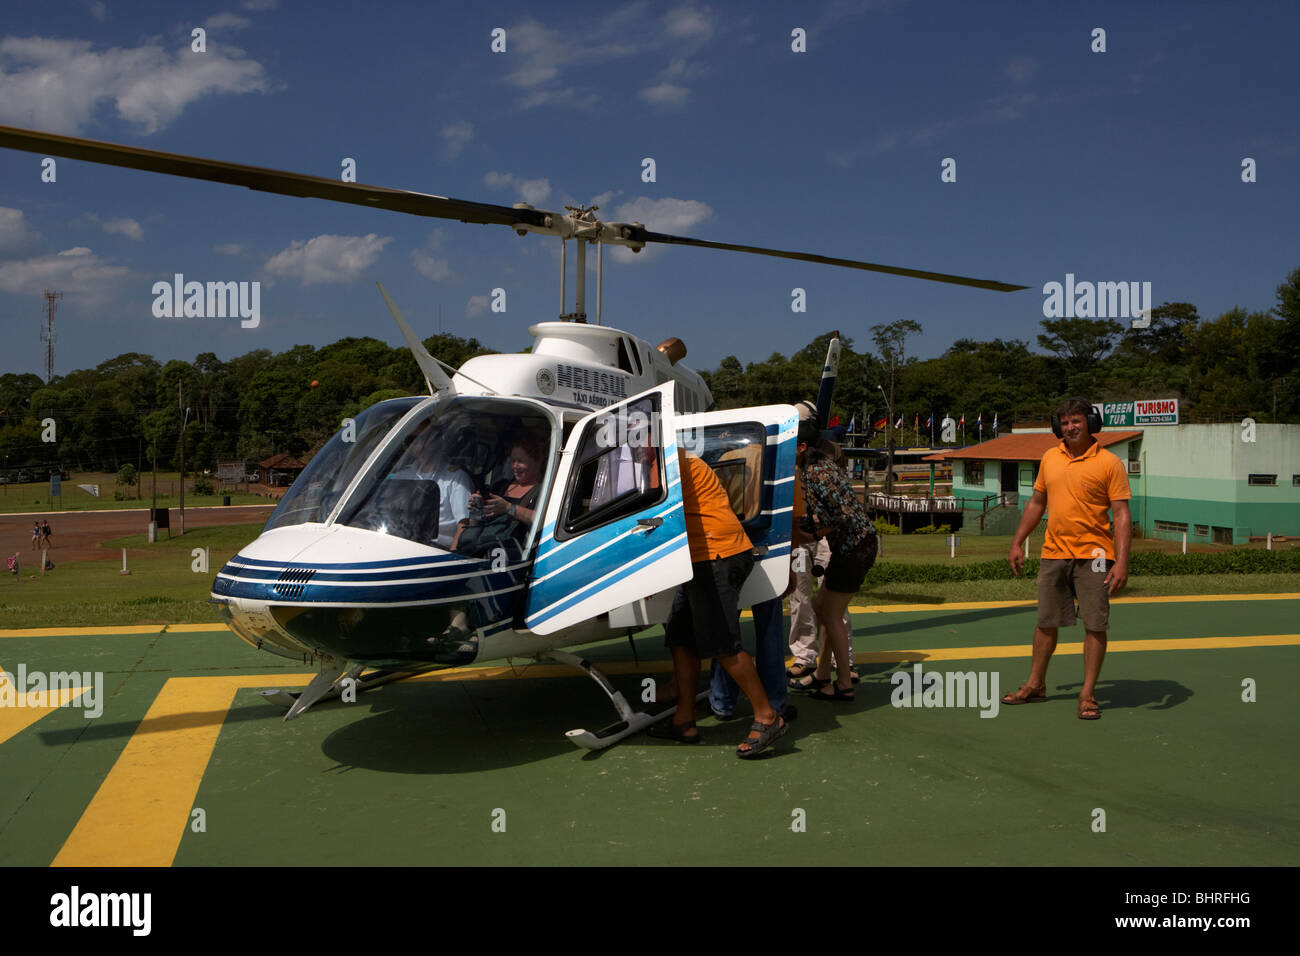 Helisul viaggio turistico gite in elicottero sopra iguacu national park, PARANA, Brasile, Sud America Foto Stock